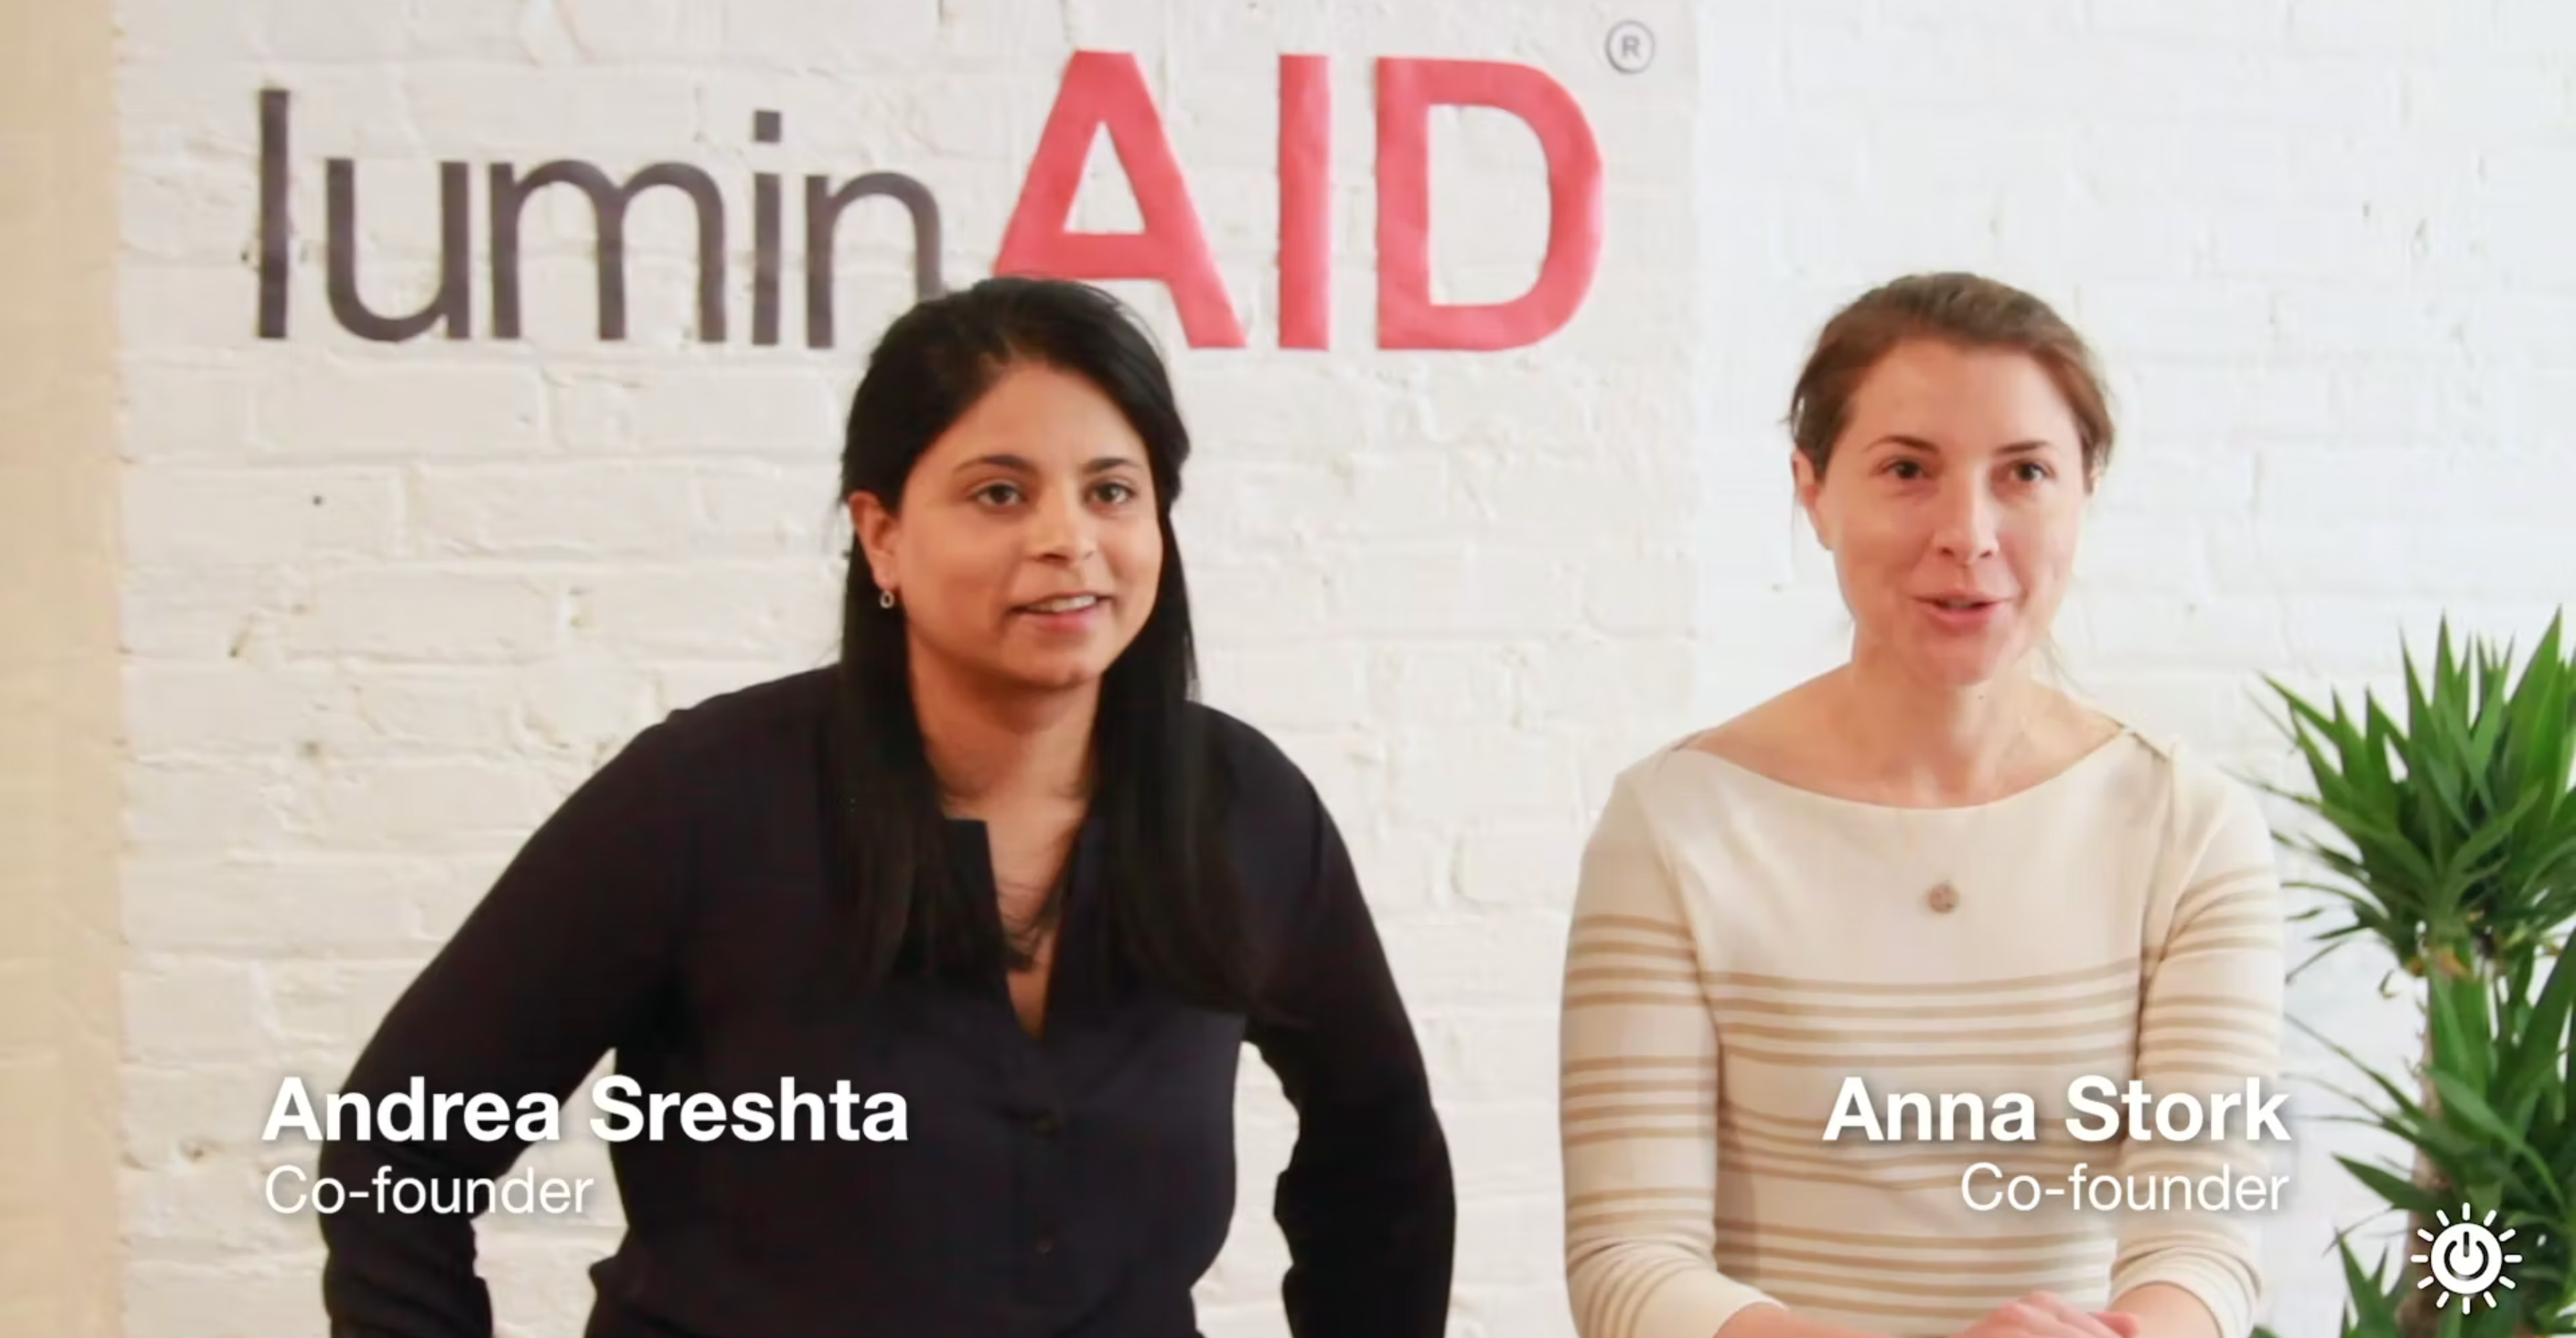 Video Thumbnail: Andrea Sreshta Co-Founder and Anna Stork, Co-Founder